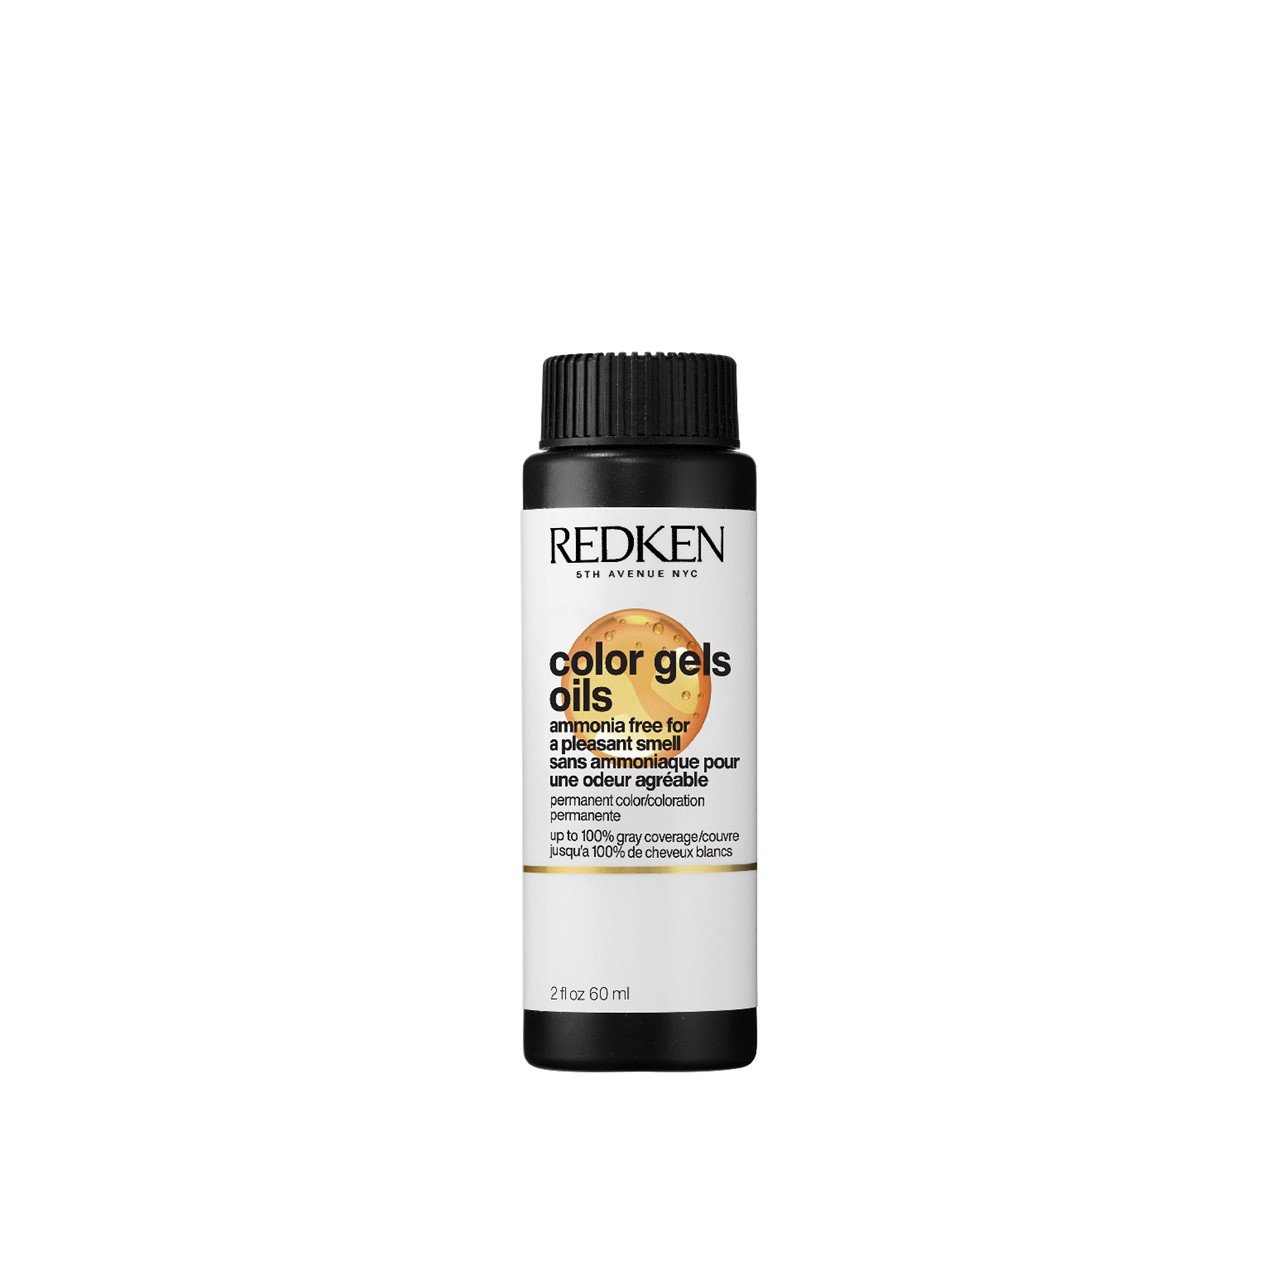 Redken Color Gels Oils 6NCh Ganache Permanent Hair Dye 60ml (2.03 fl oz)